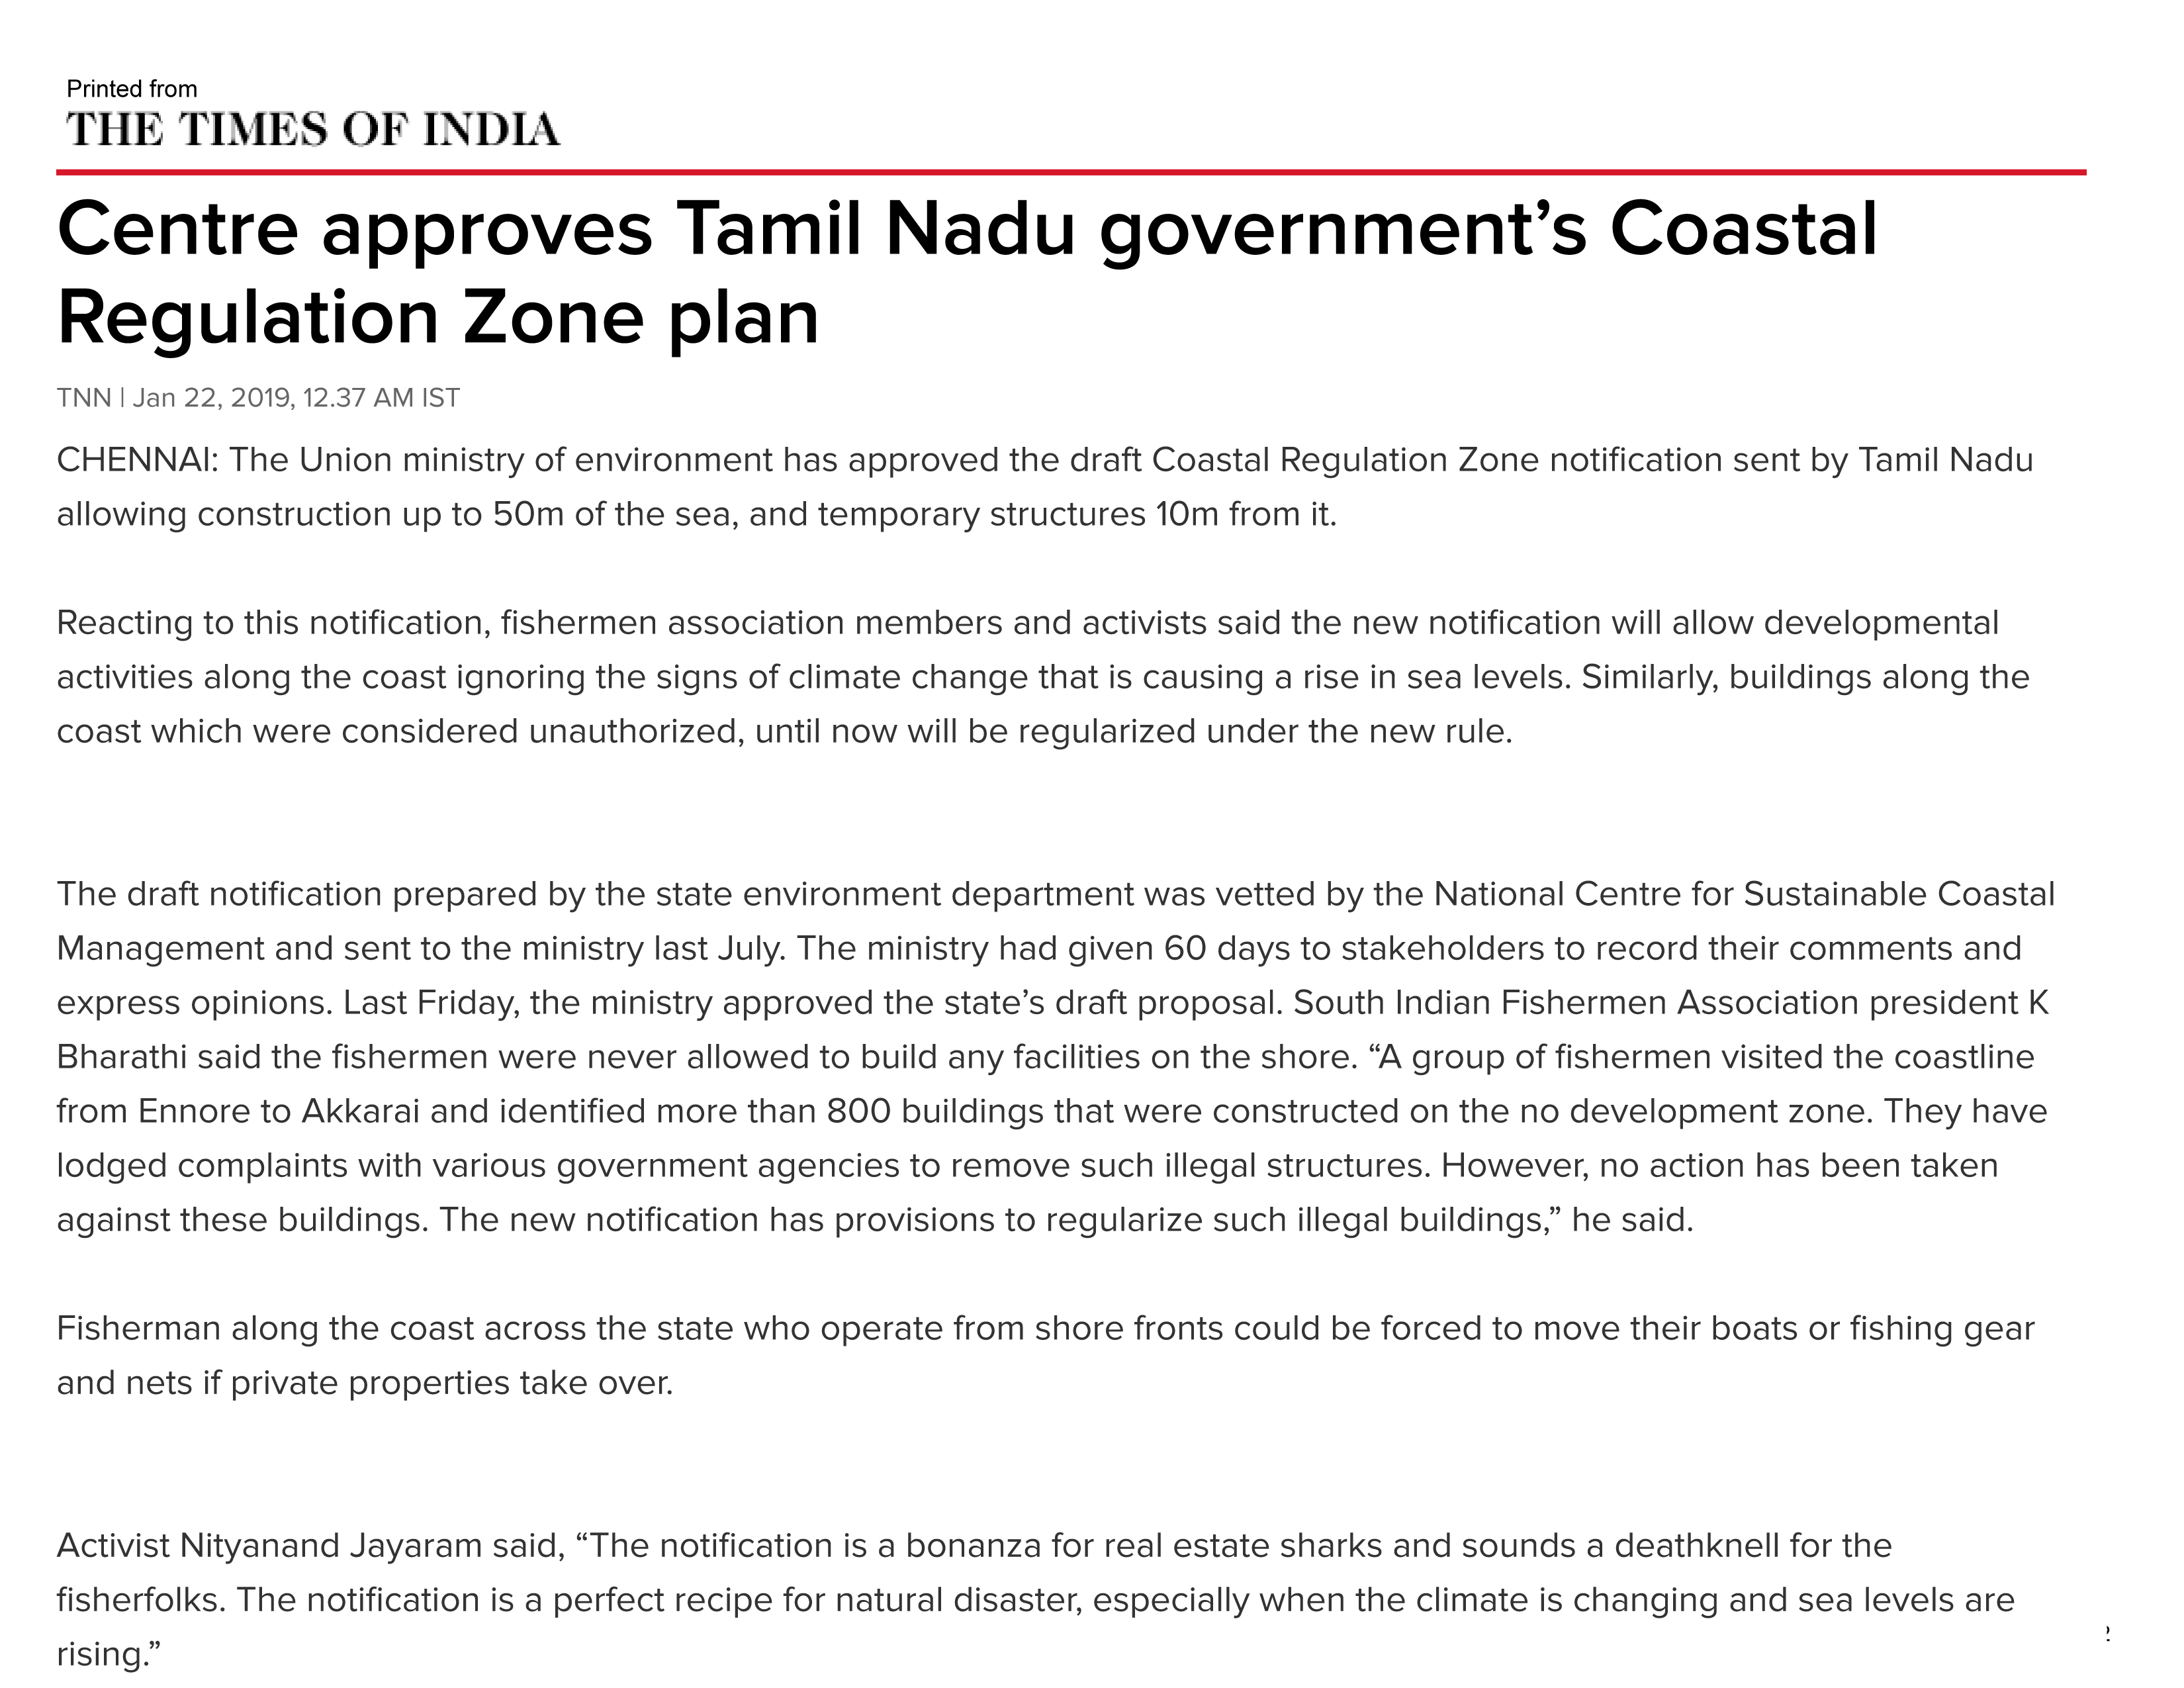 Centre approves Tamil Nadu government’s Coastal Regulation Zone Plan